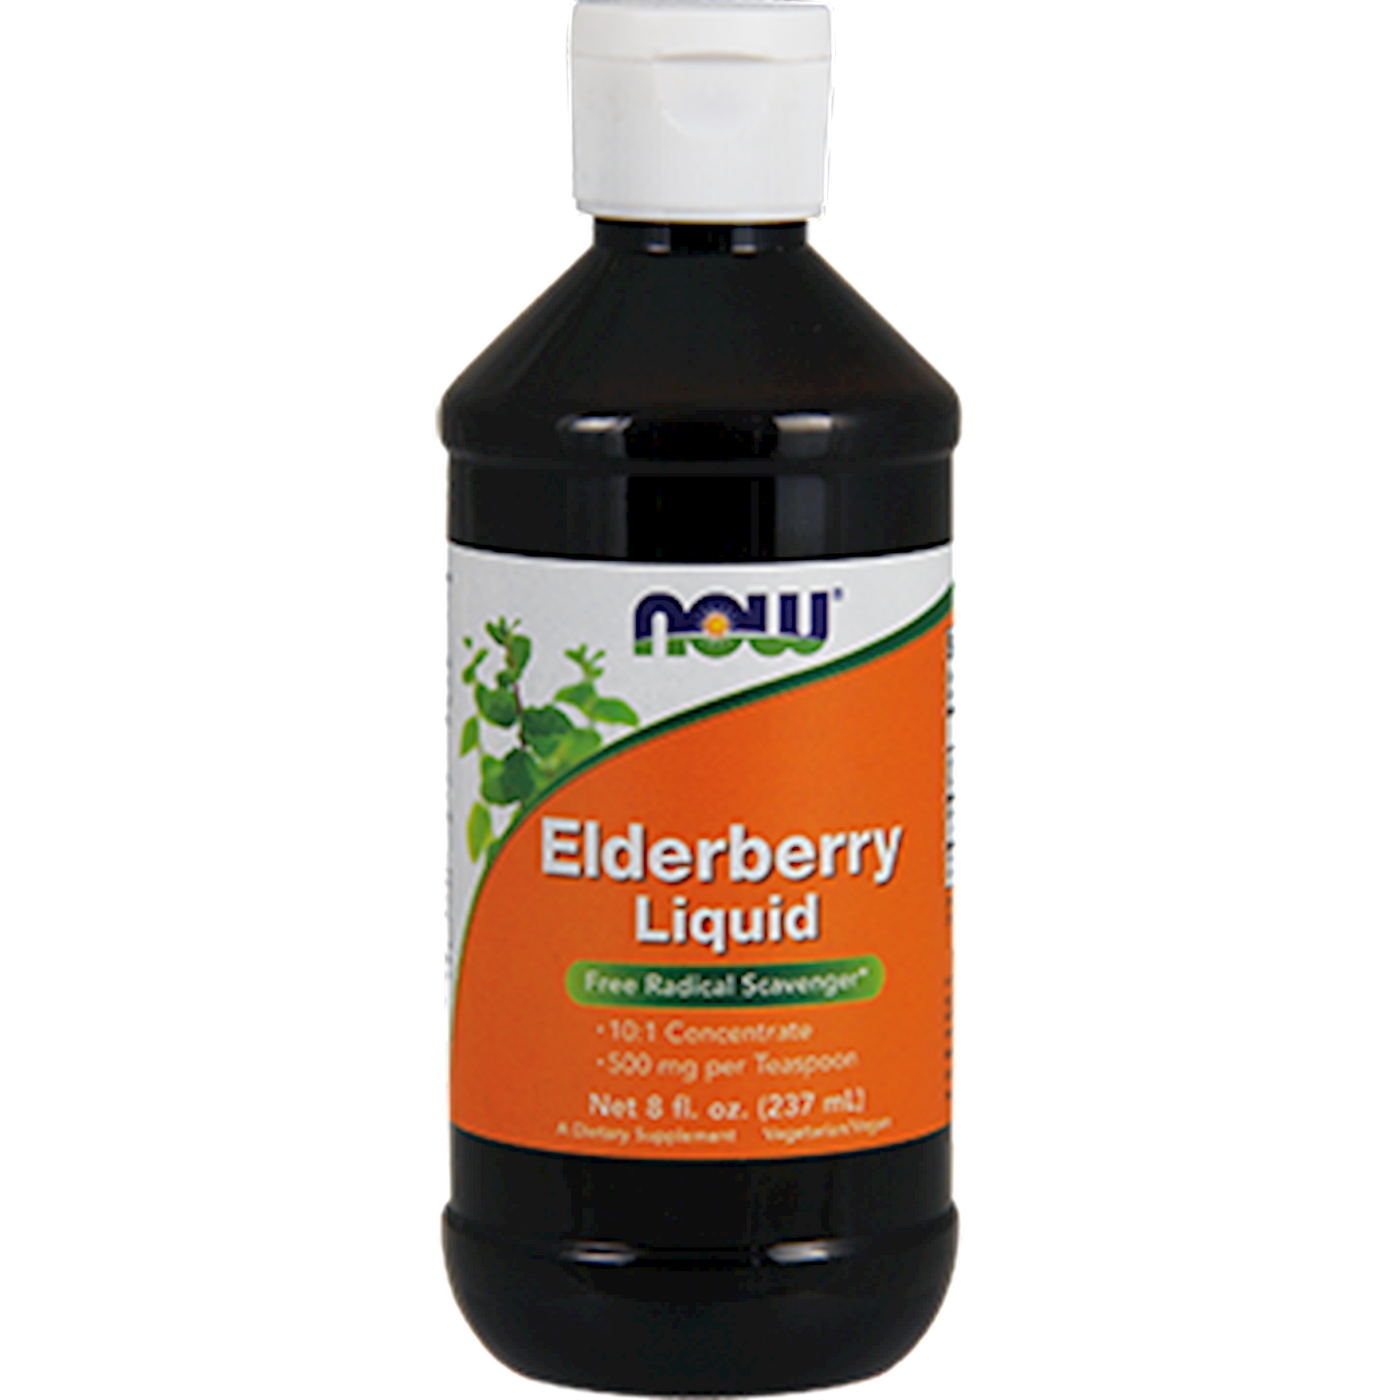 Elderberry Liquid 8 fl oz Curated Wellness